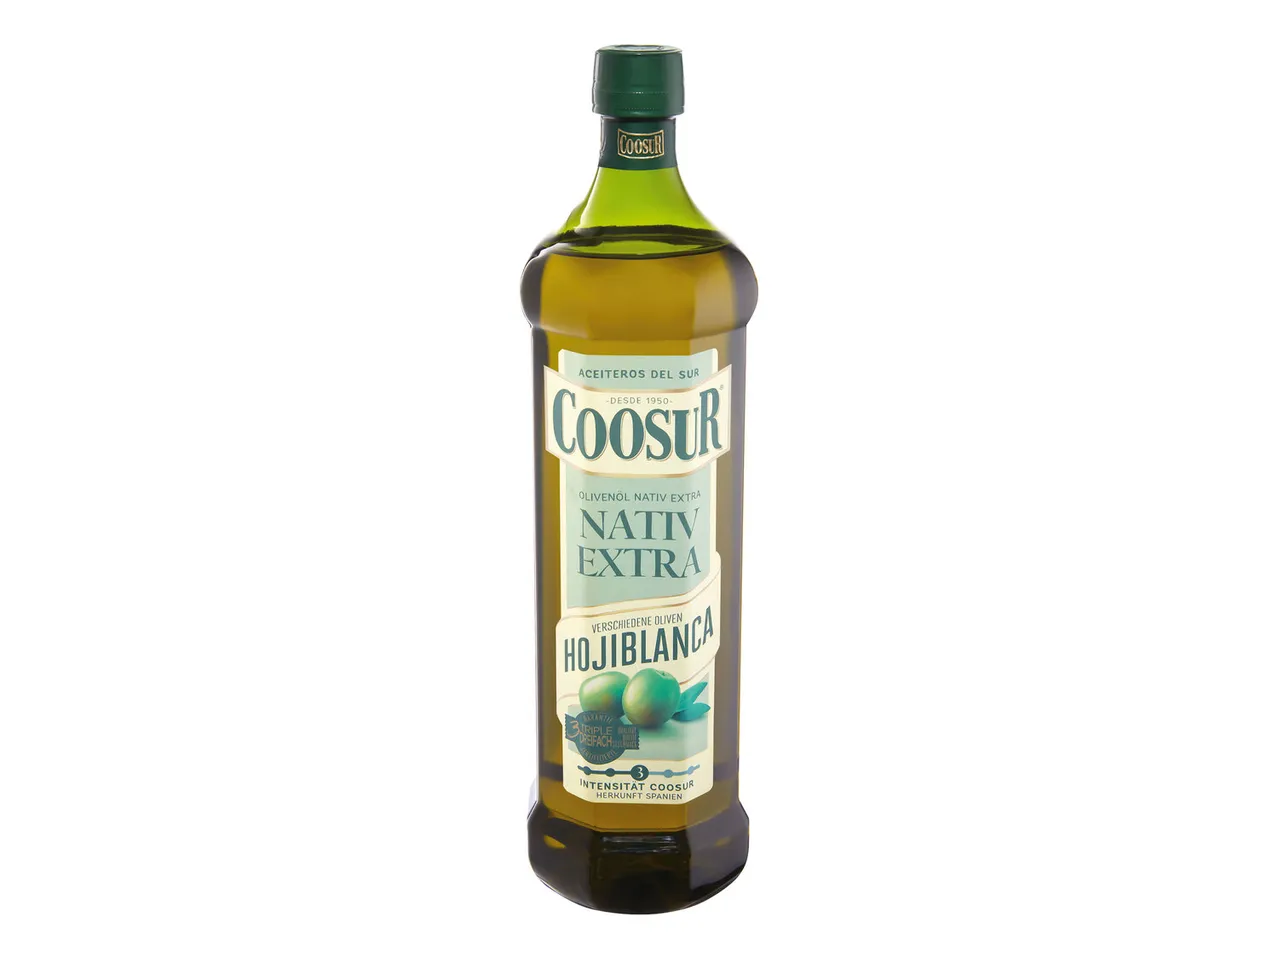 Hojiblanca Coosur Olivenöl